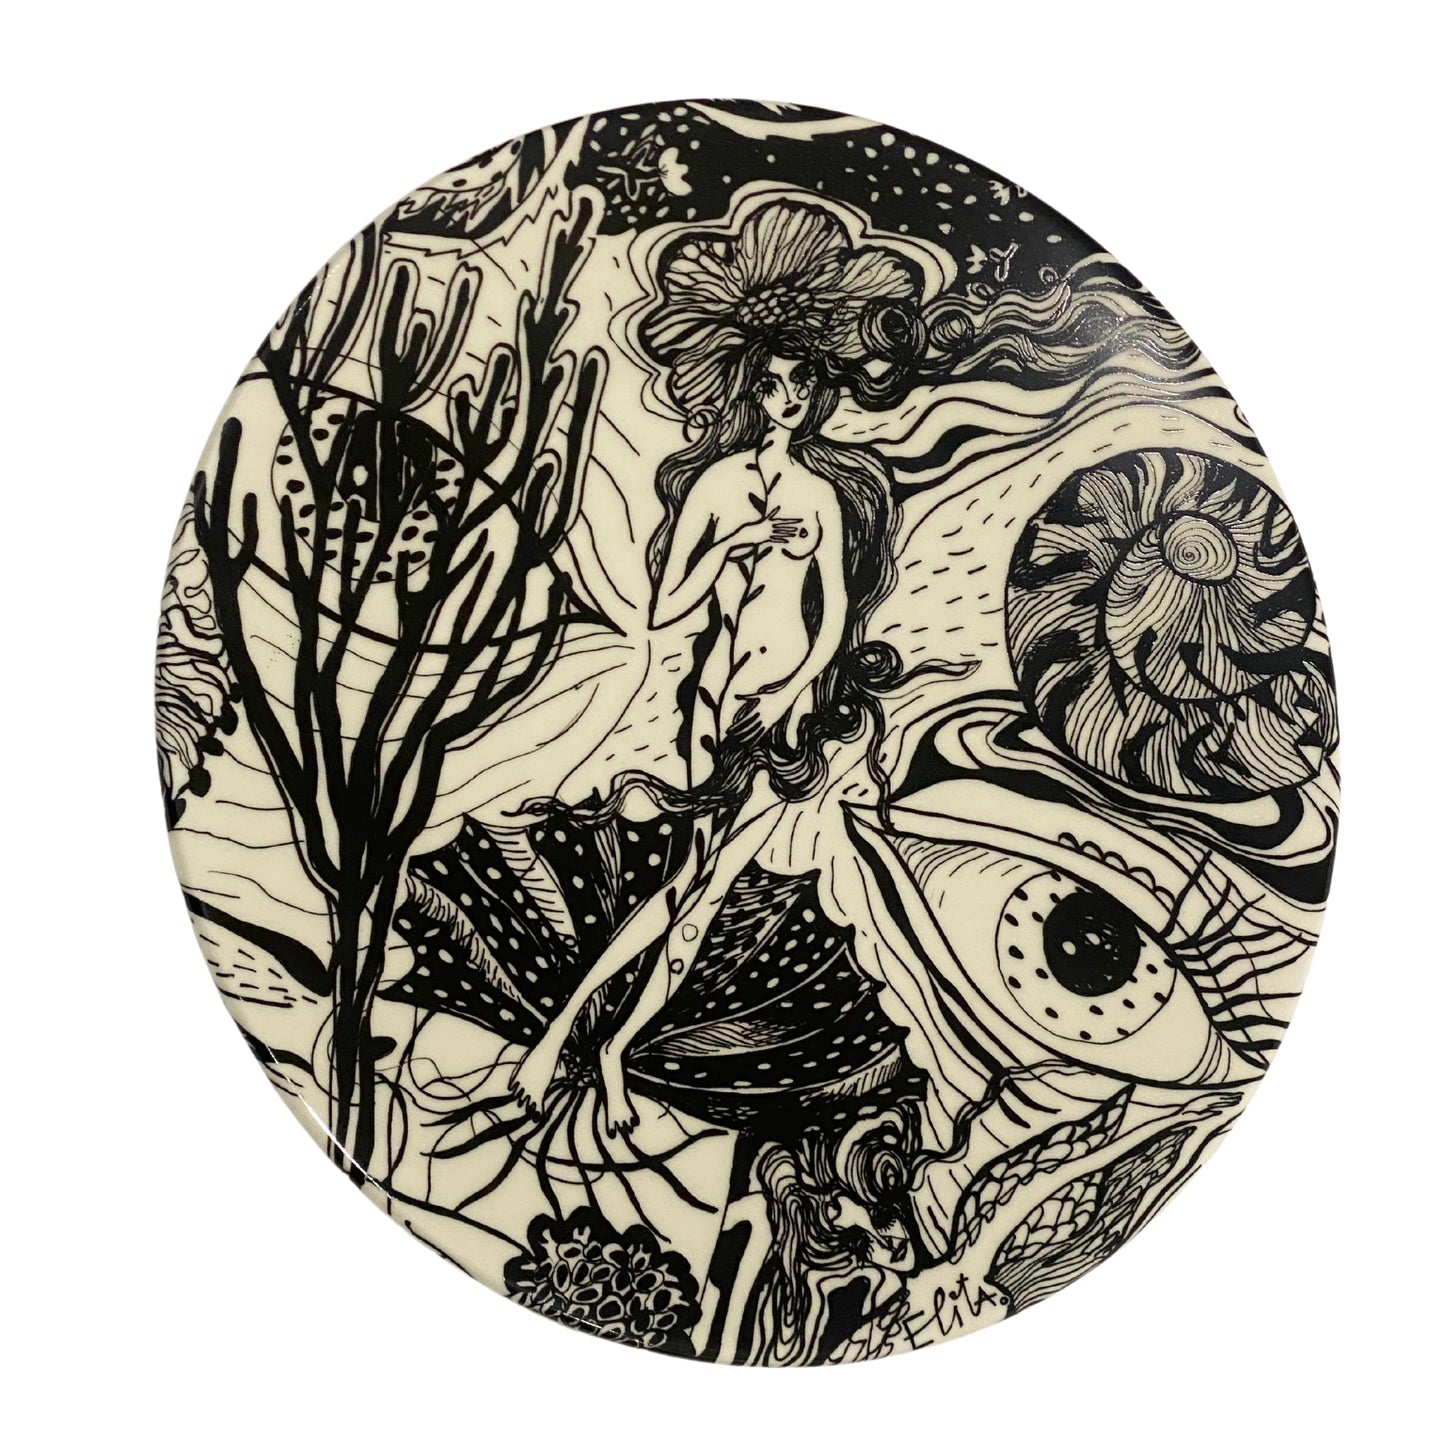 Elita's Patmalniece's porcelain plate - Botany